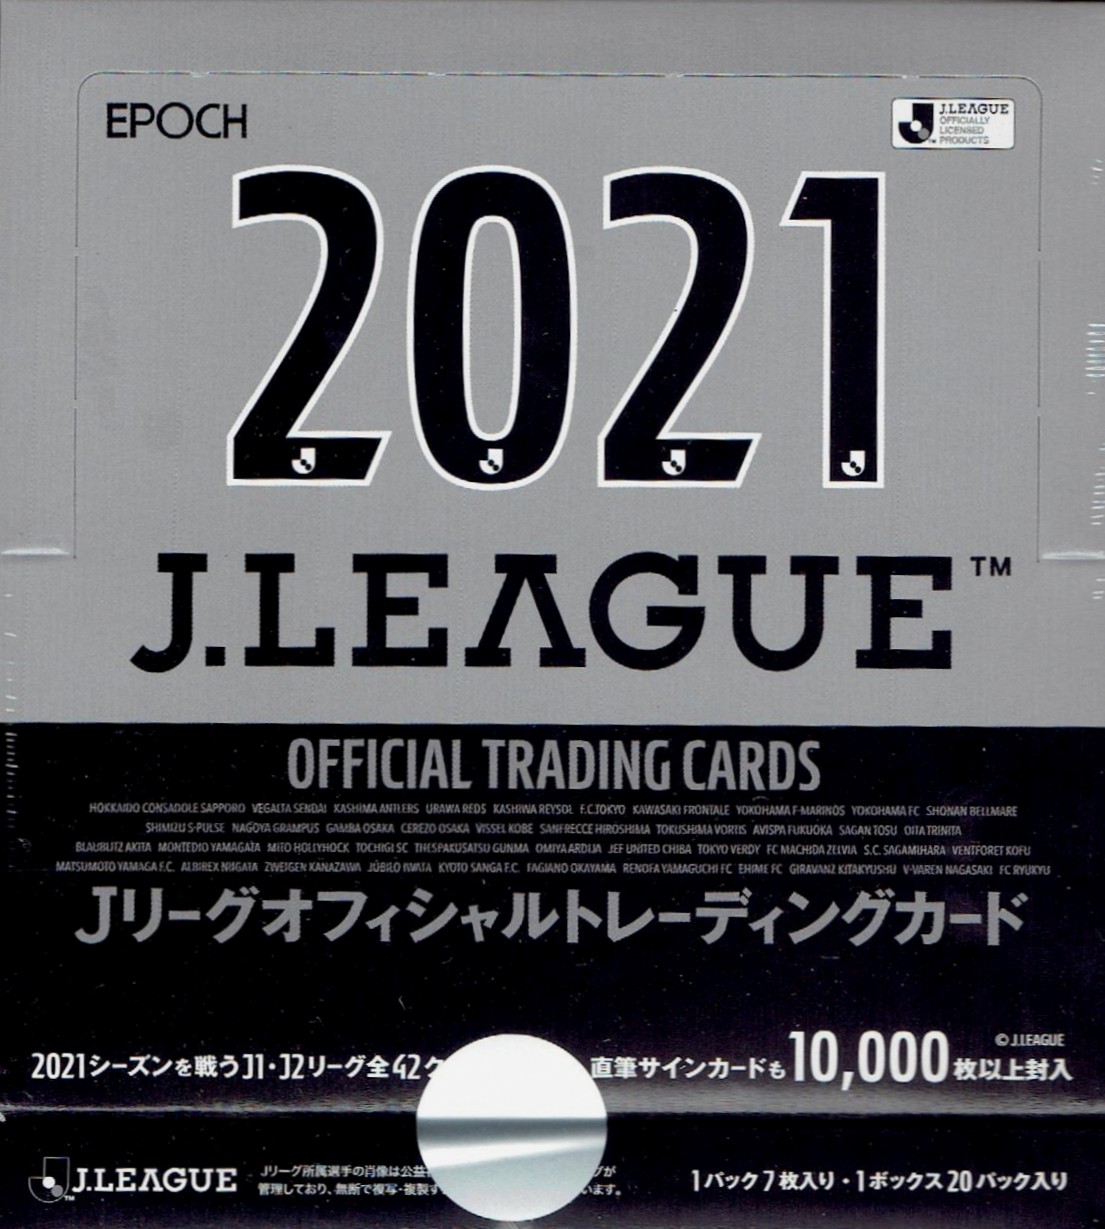 ⚽ EPOCH 2021 Jリーグオフィシャルトレーディングカード【製品情報 ...